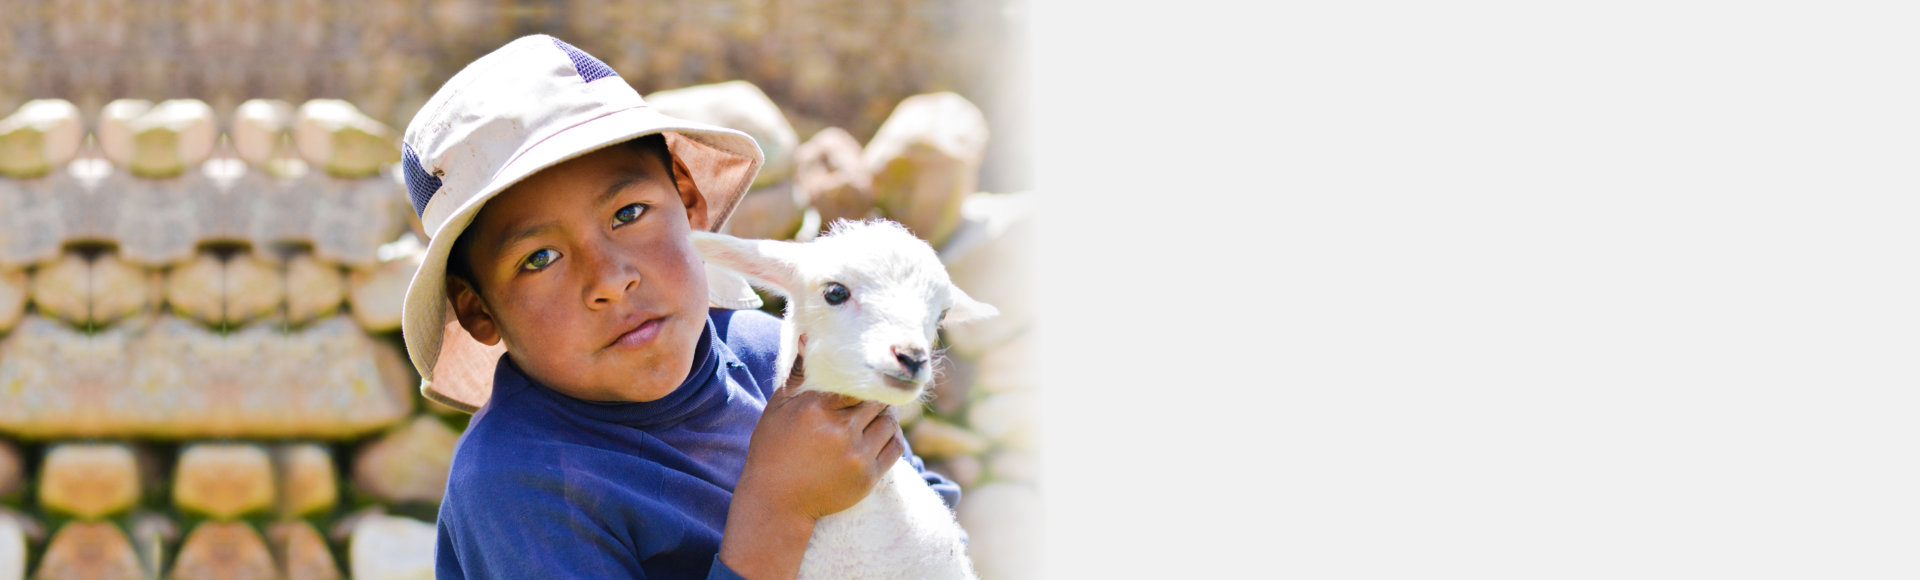 boy holding a goat